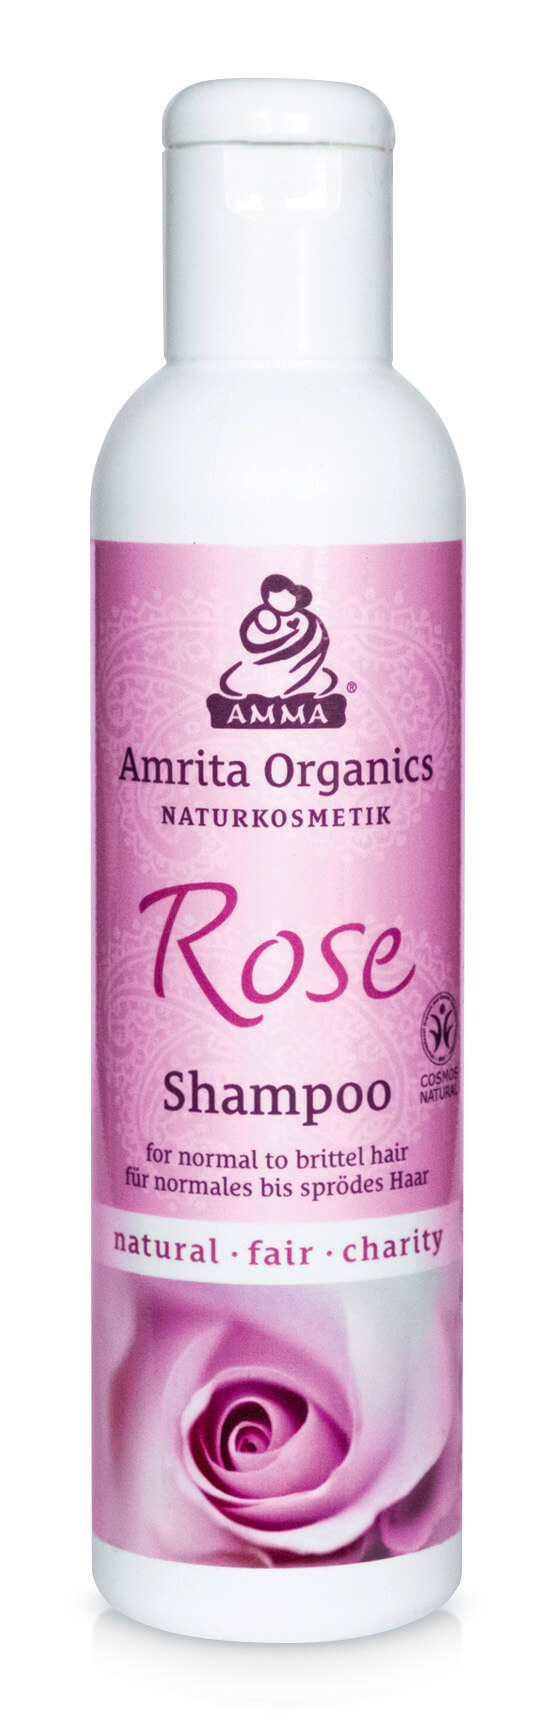 Shampoo Rose